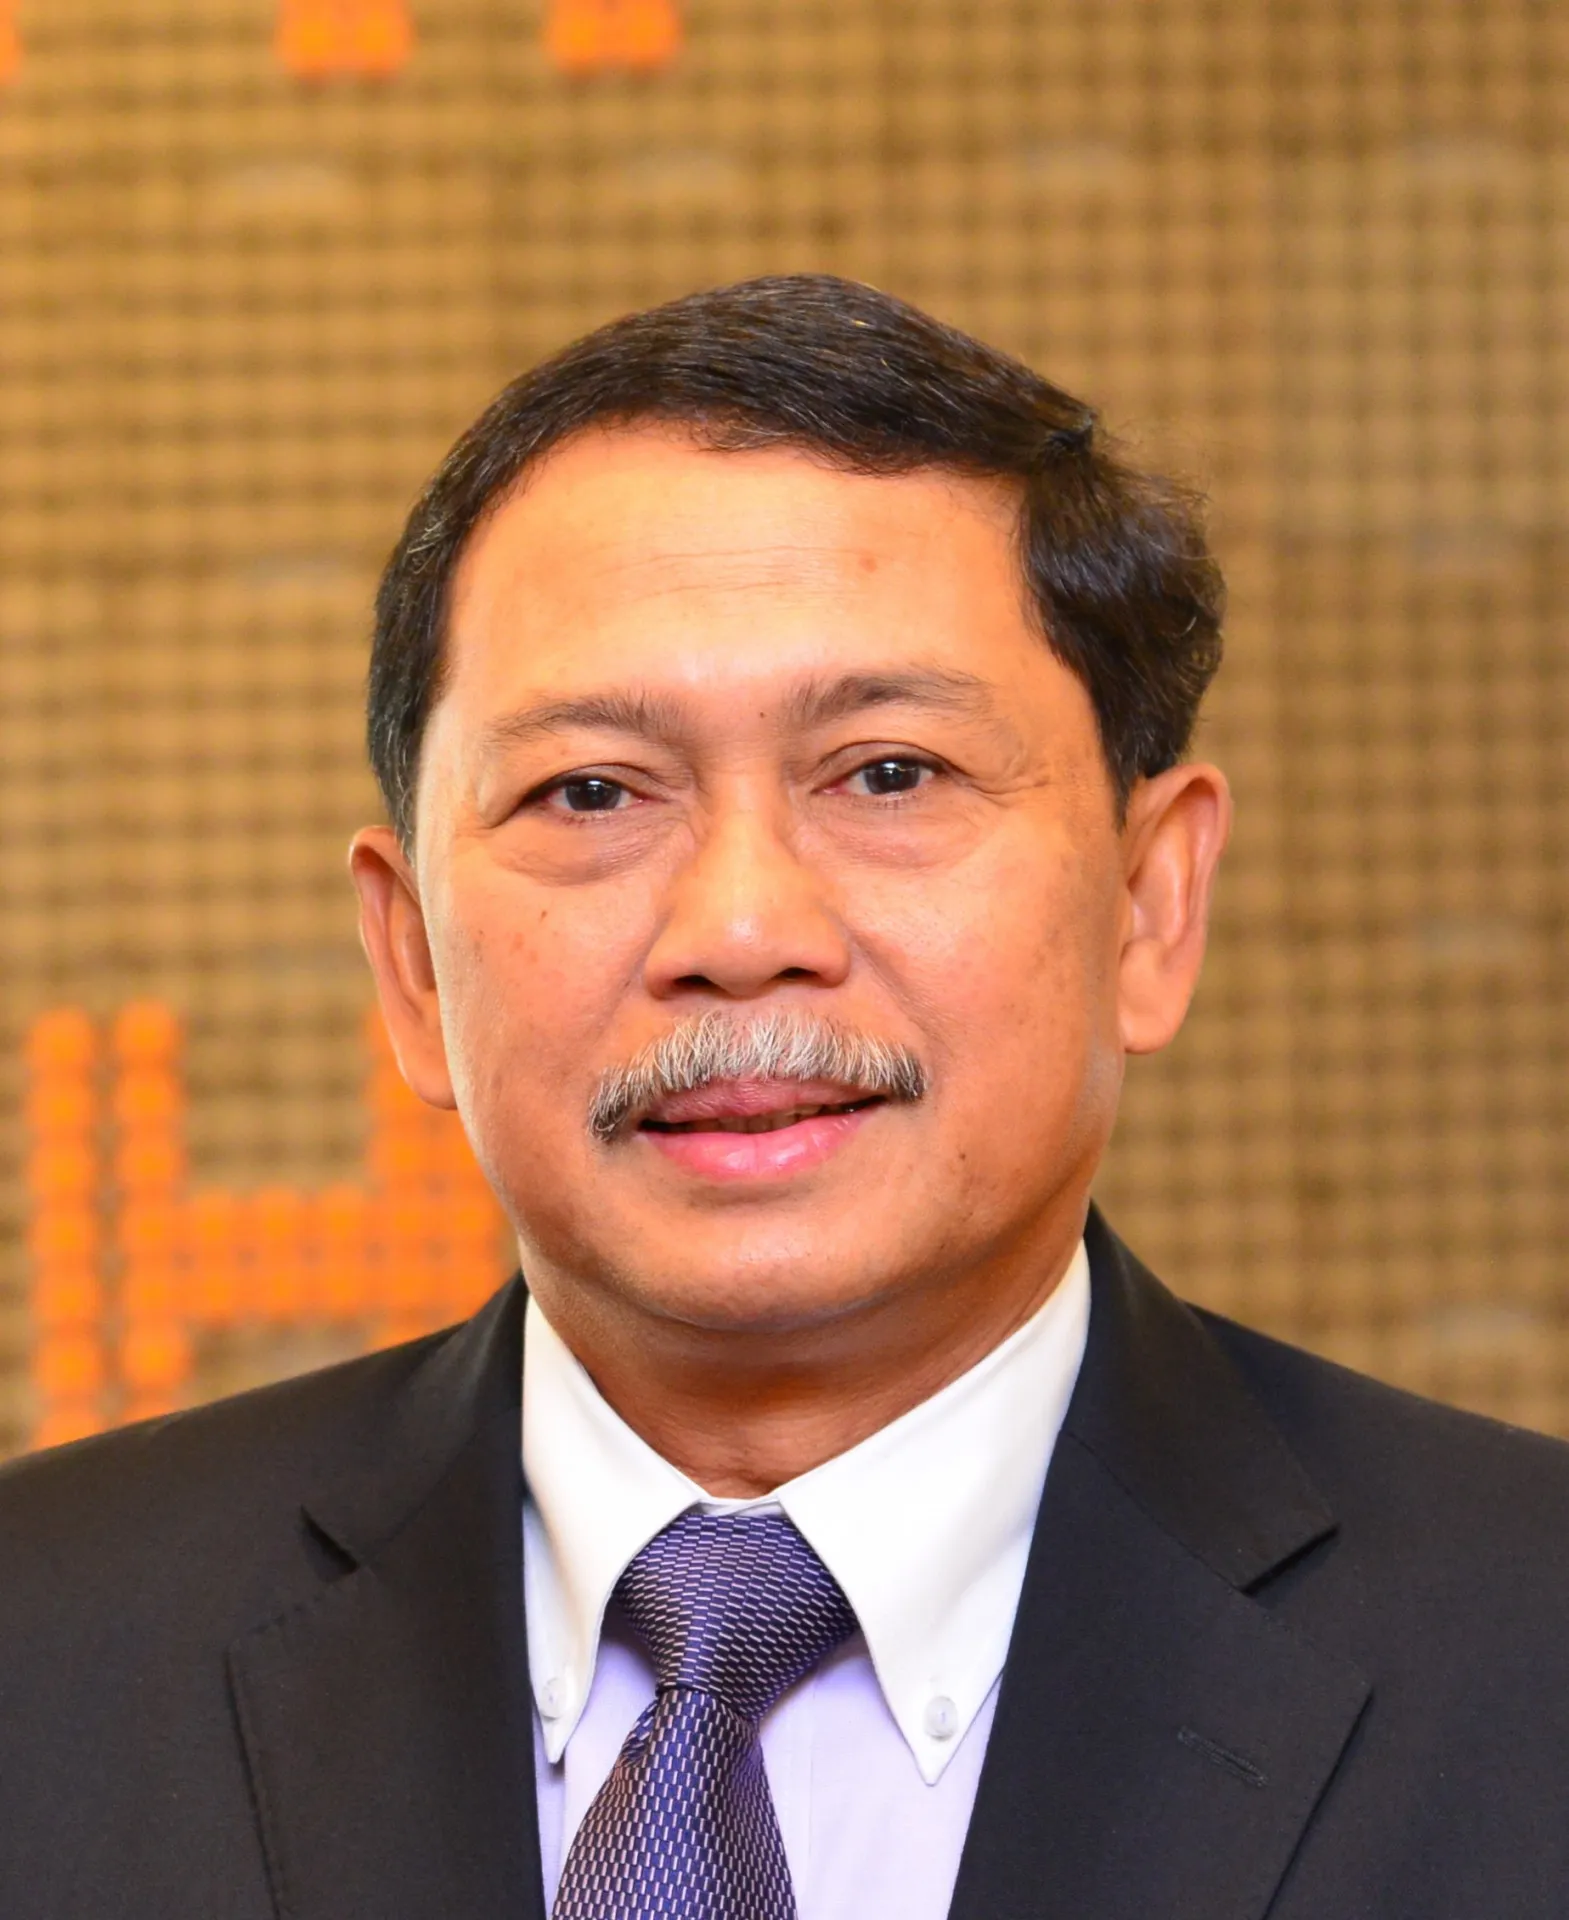 Datuk Ismet Suki, President of UMW Toyota Motor